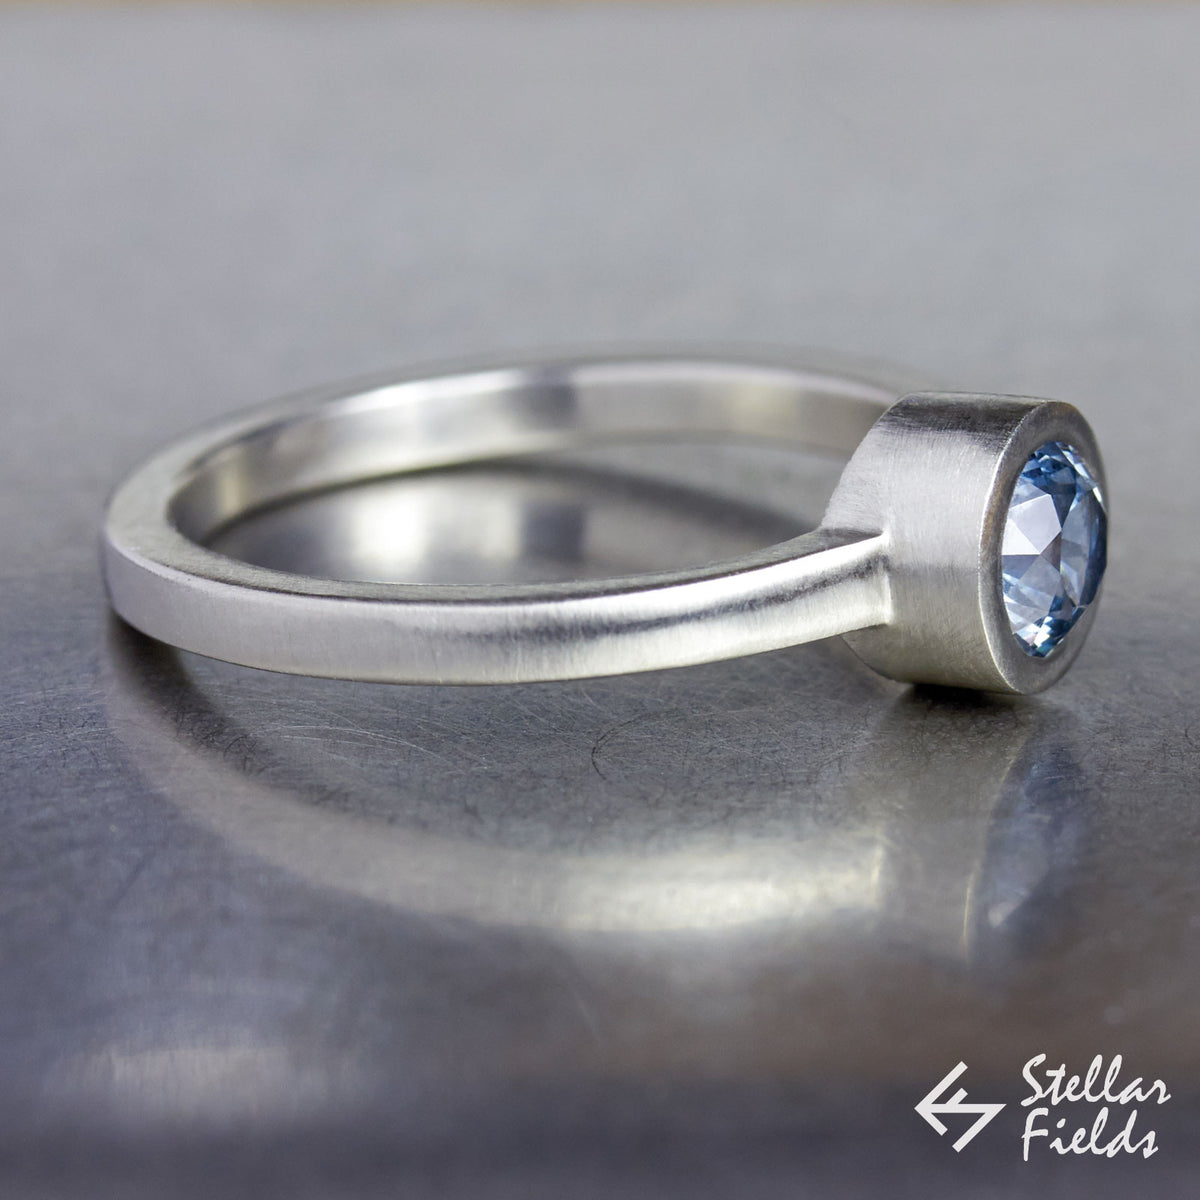 Ethical Blue Montana Sapphire Full Bezel Engagement Ring in 14k White Gold Platinum Stellar Fields Jewelry